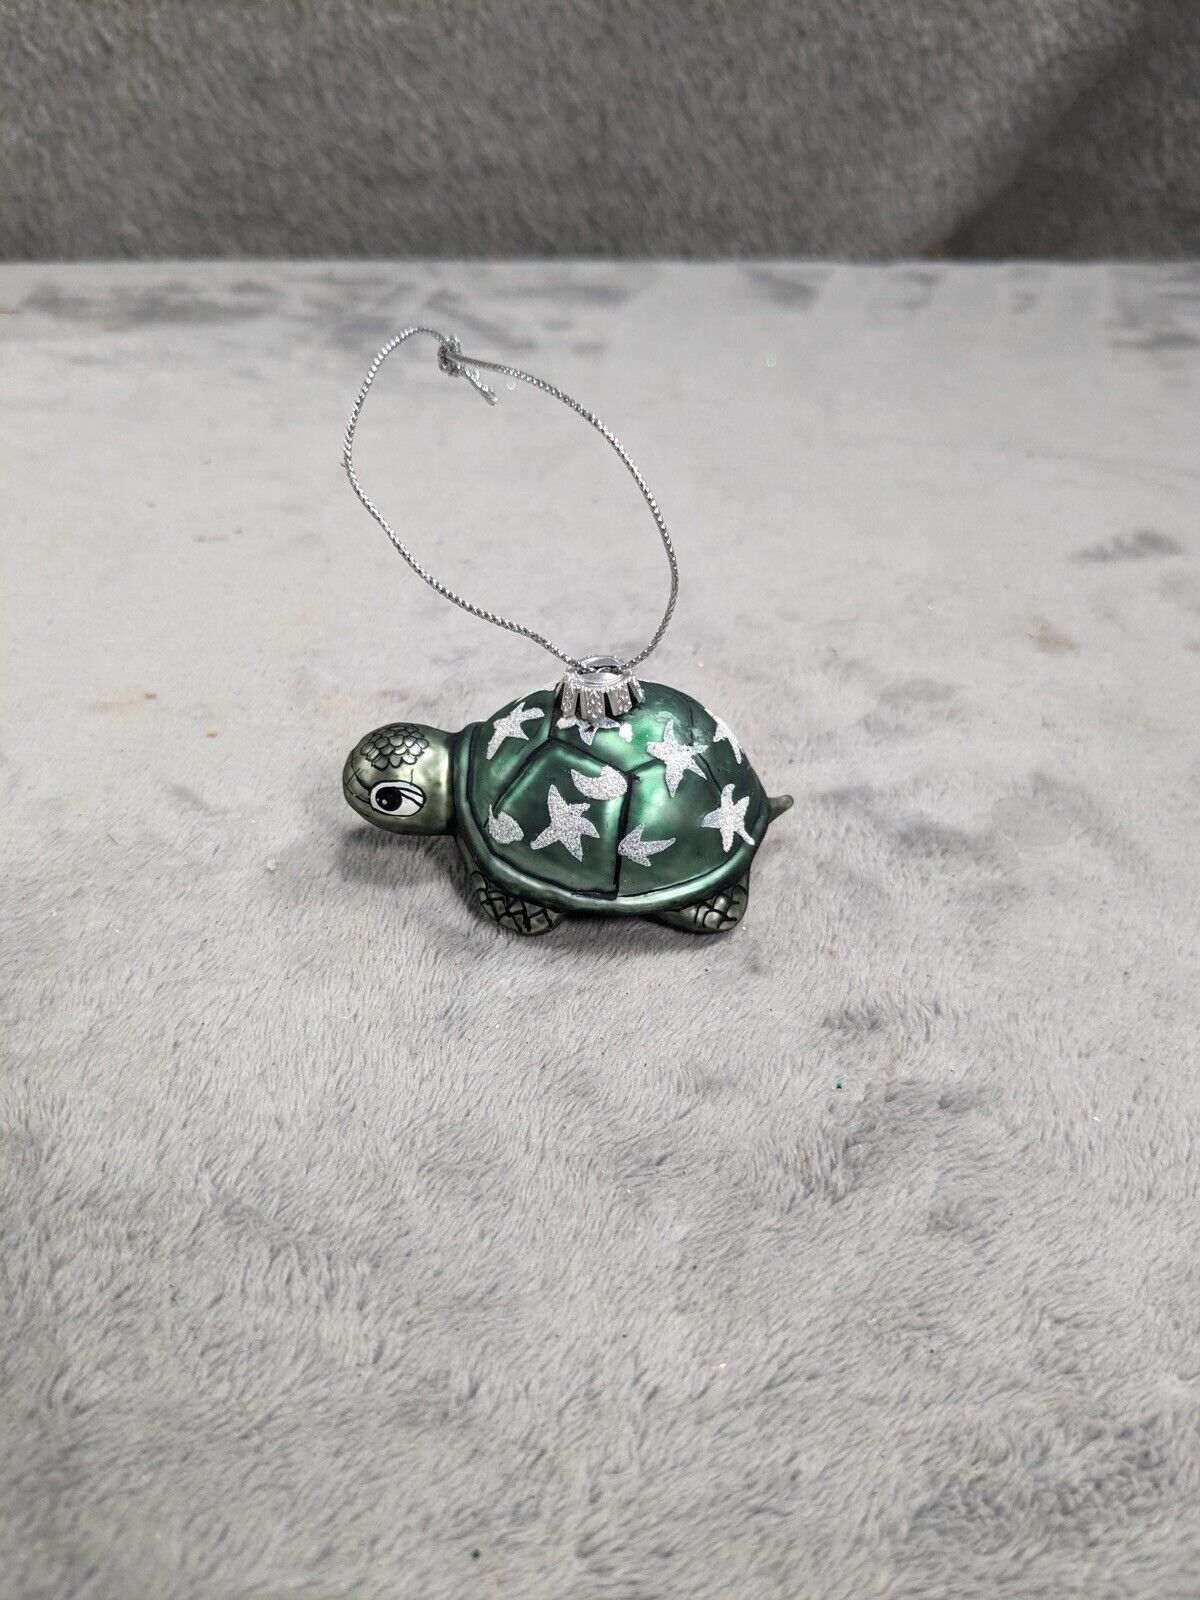  Small Hawiian HONU Blown Glass Sea Turtle Christmas Ornament by Island Heritage